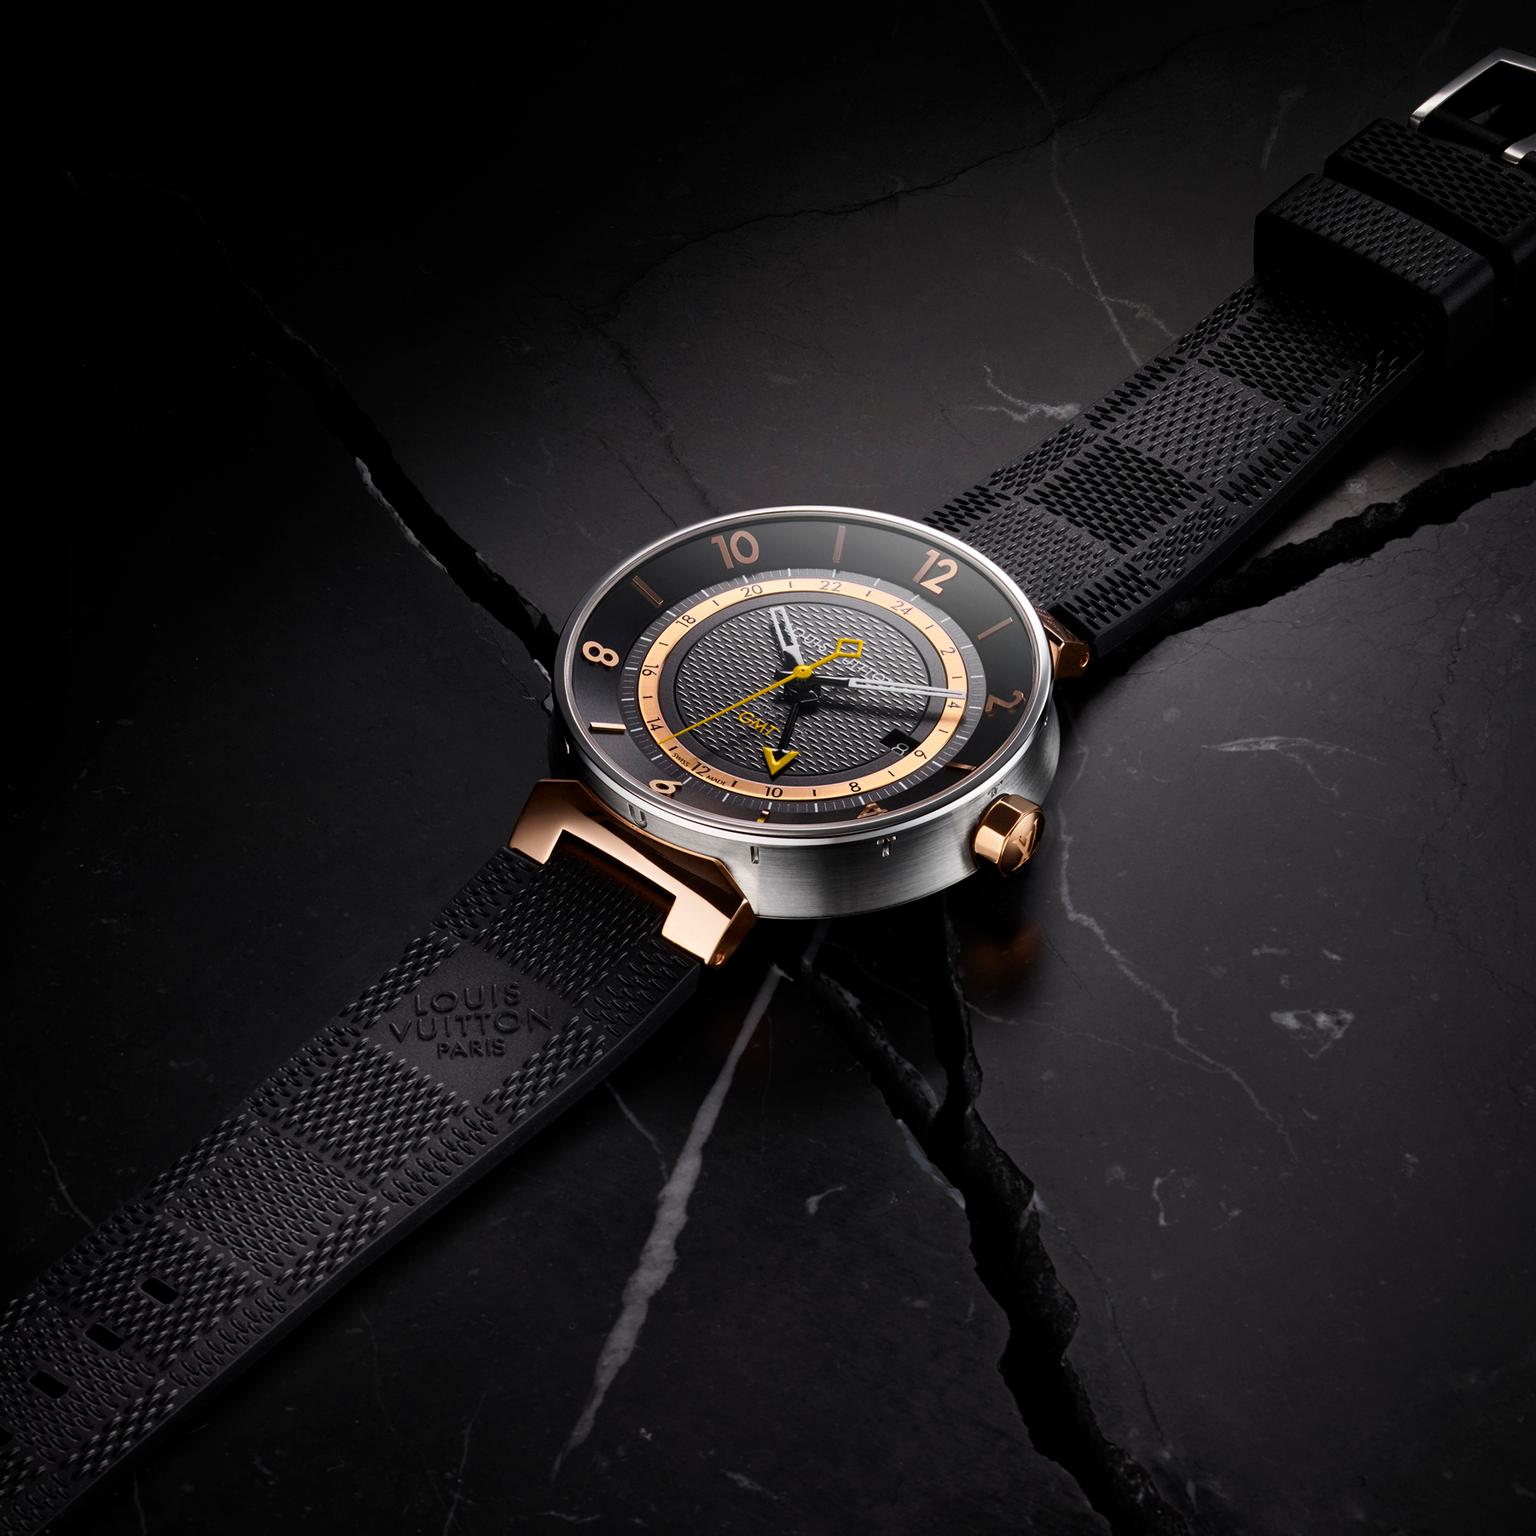 Tambour pink gold watch Louis Vuitton Black in Pink gold - 24246766